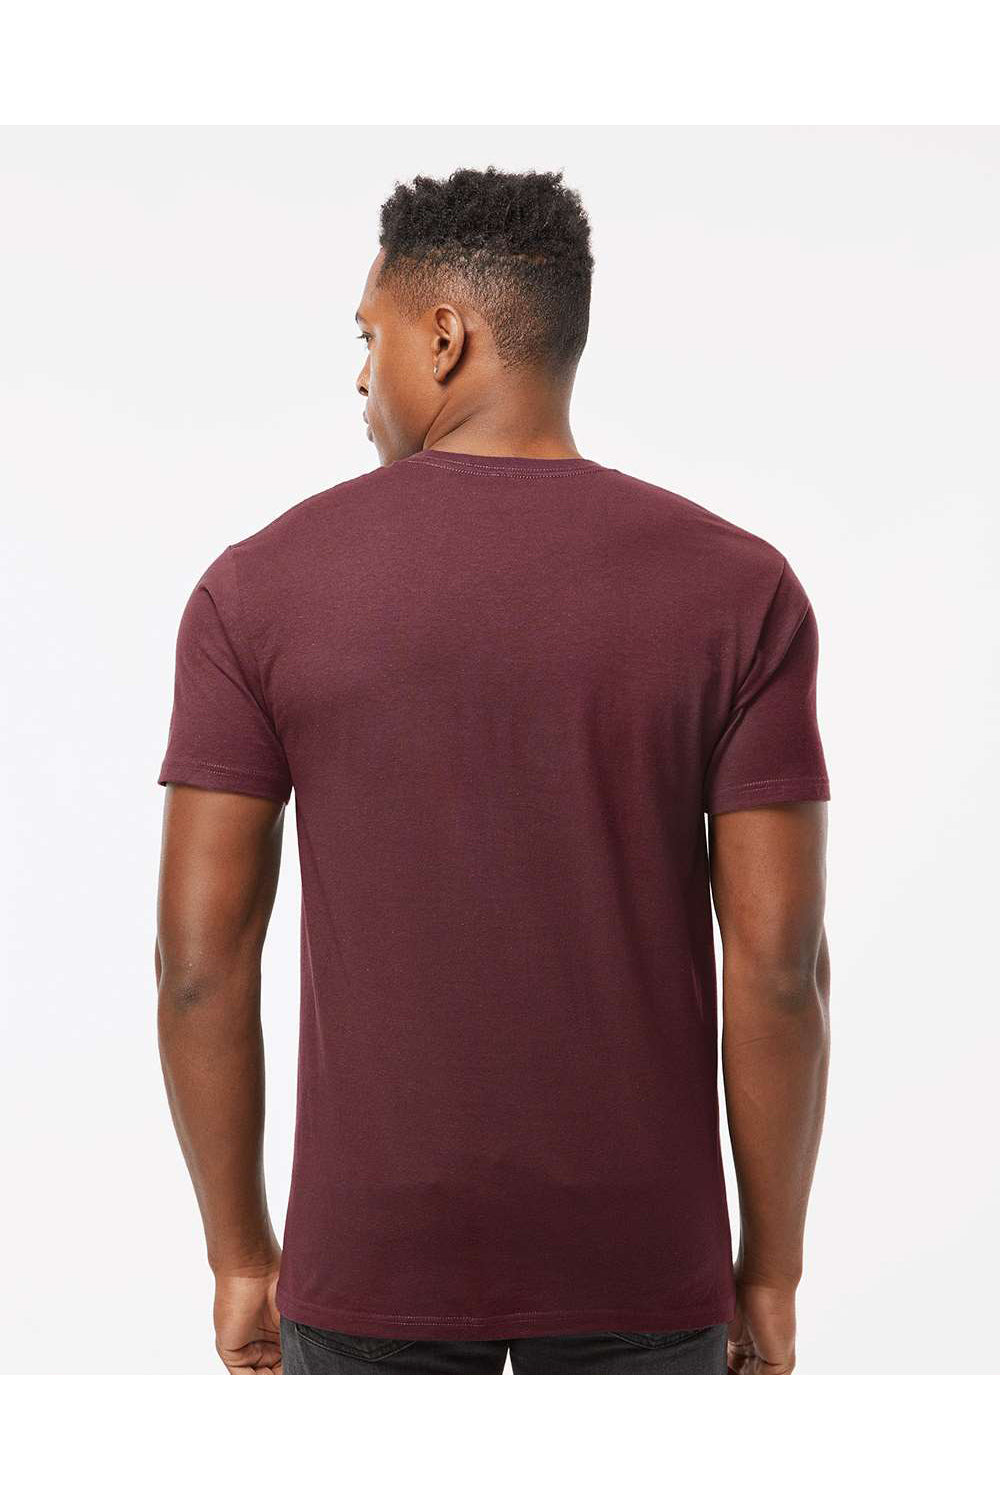 Tultex 290 Mens Jersey Short Sleeve Crewneck T-Shirt Burgundy Model Back